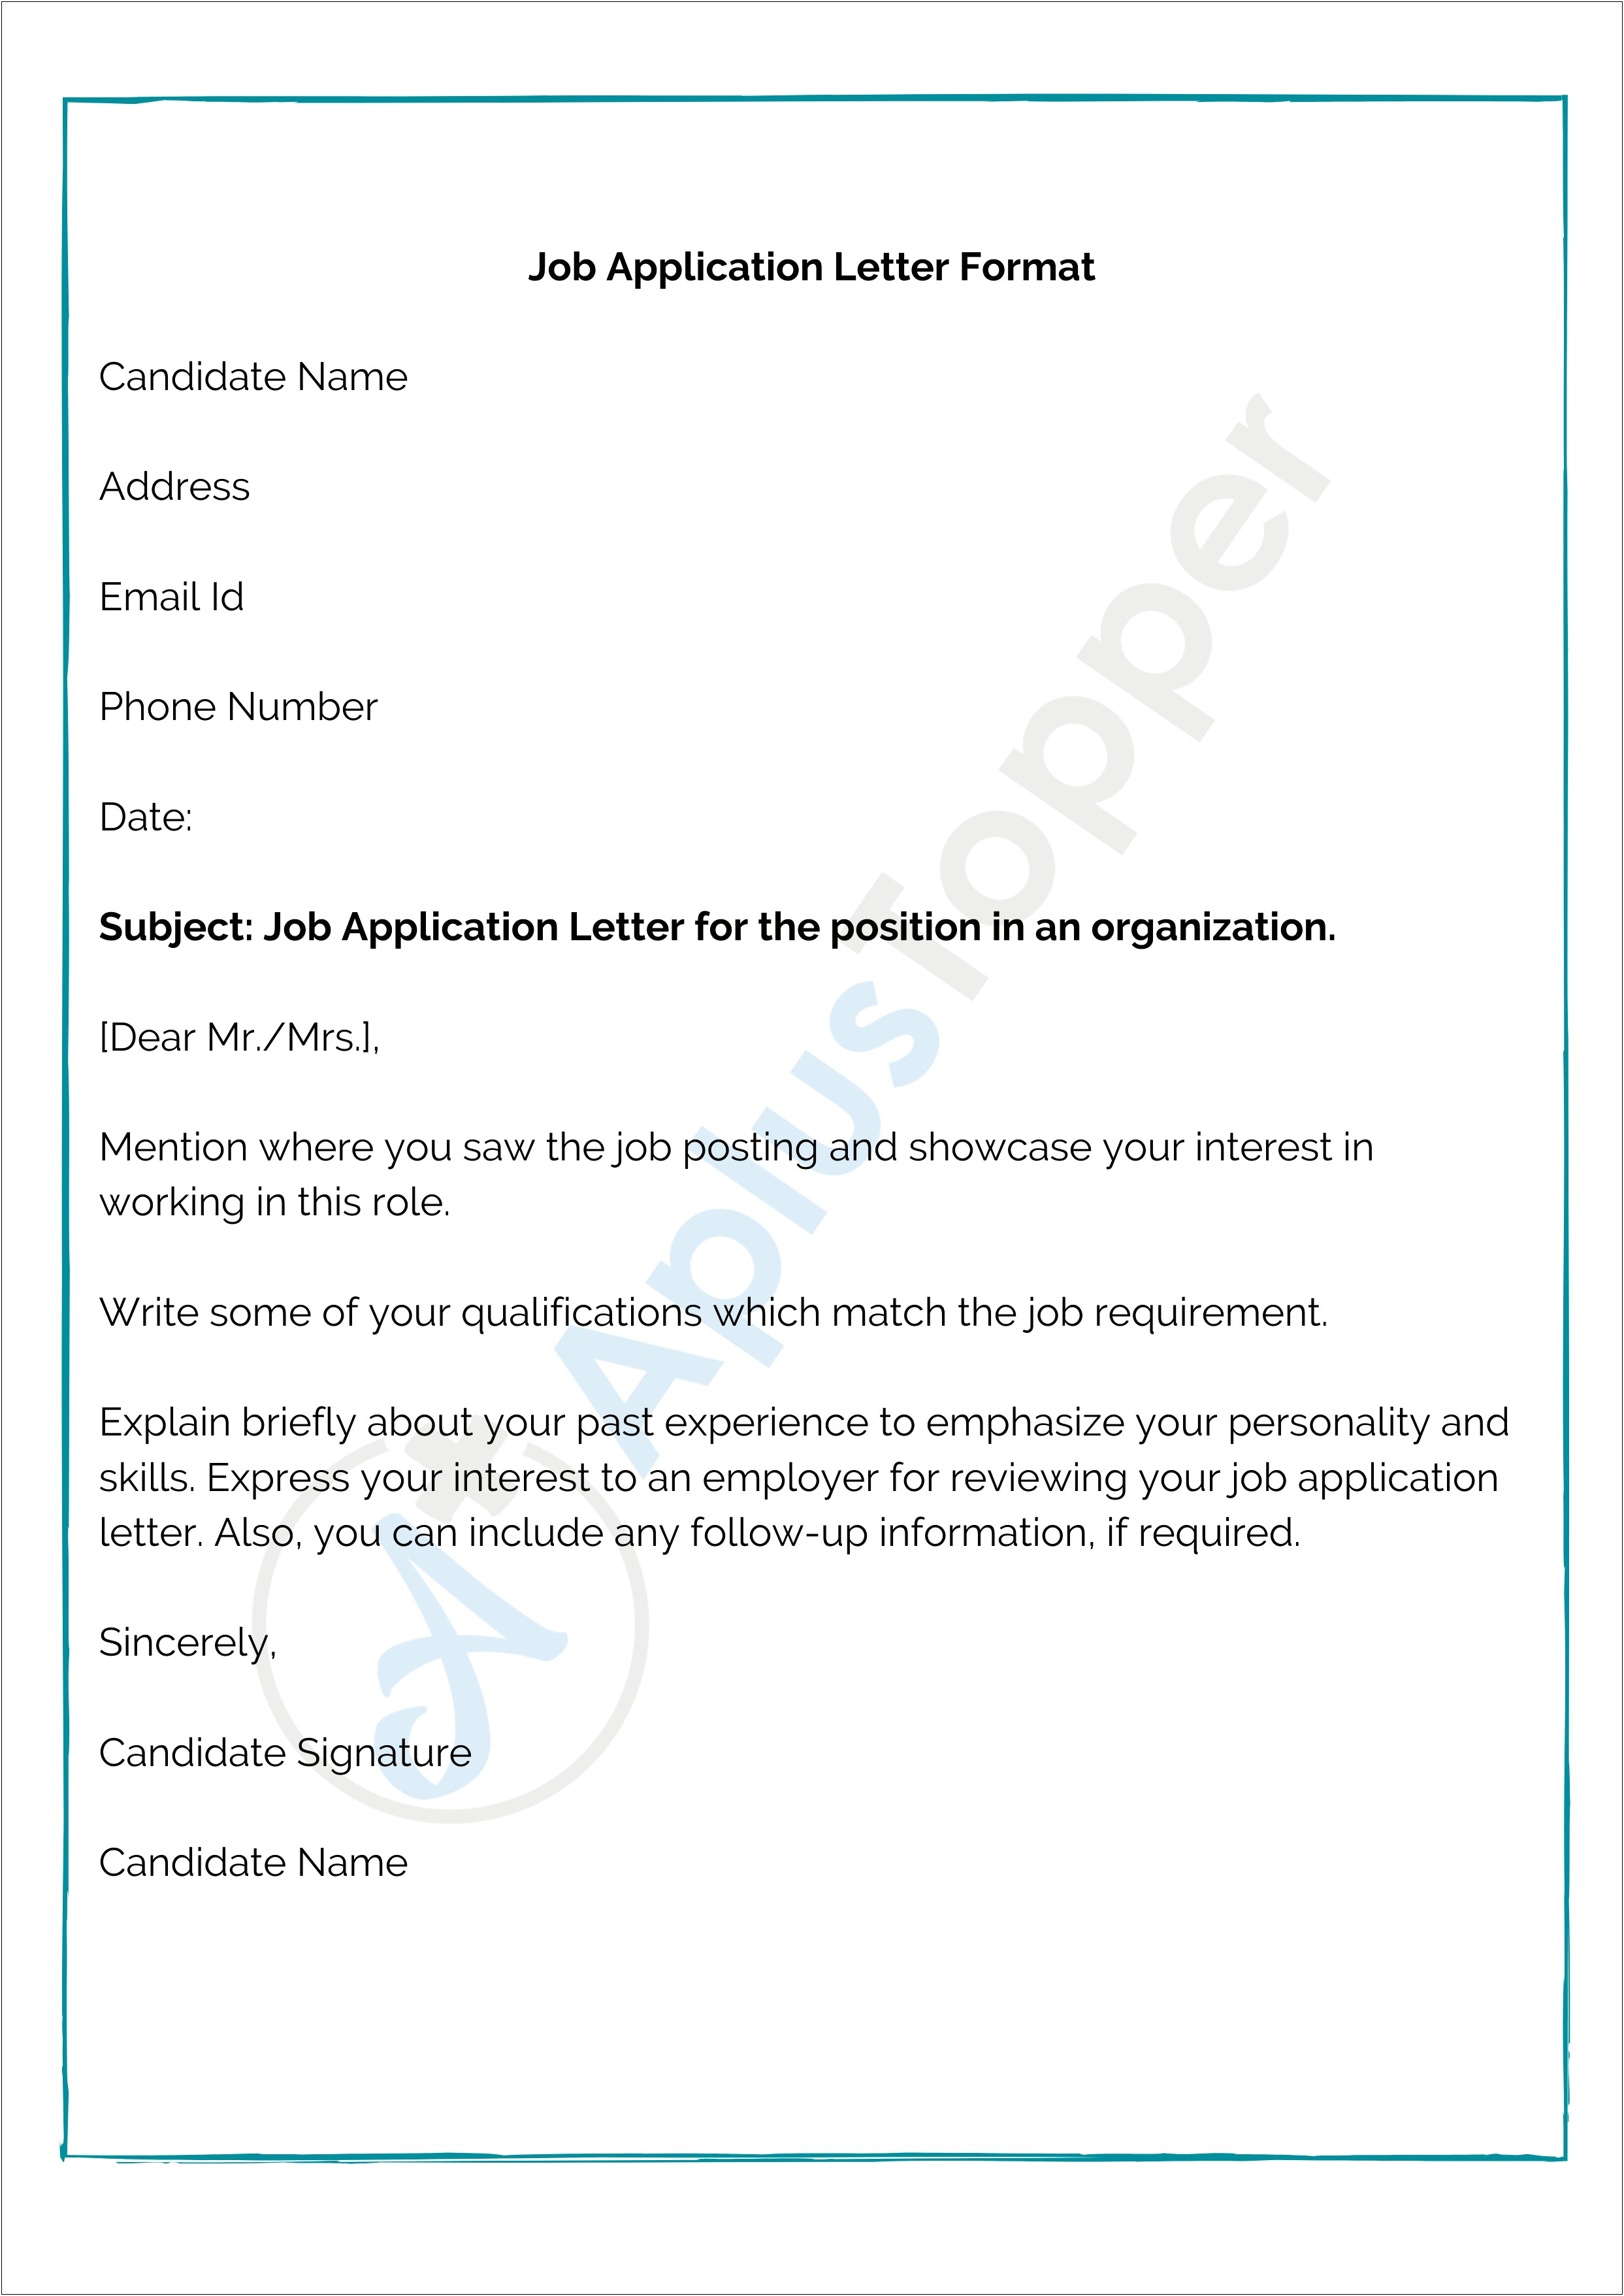 Resume Letter Sample For Any Position